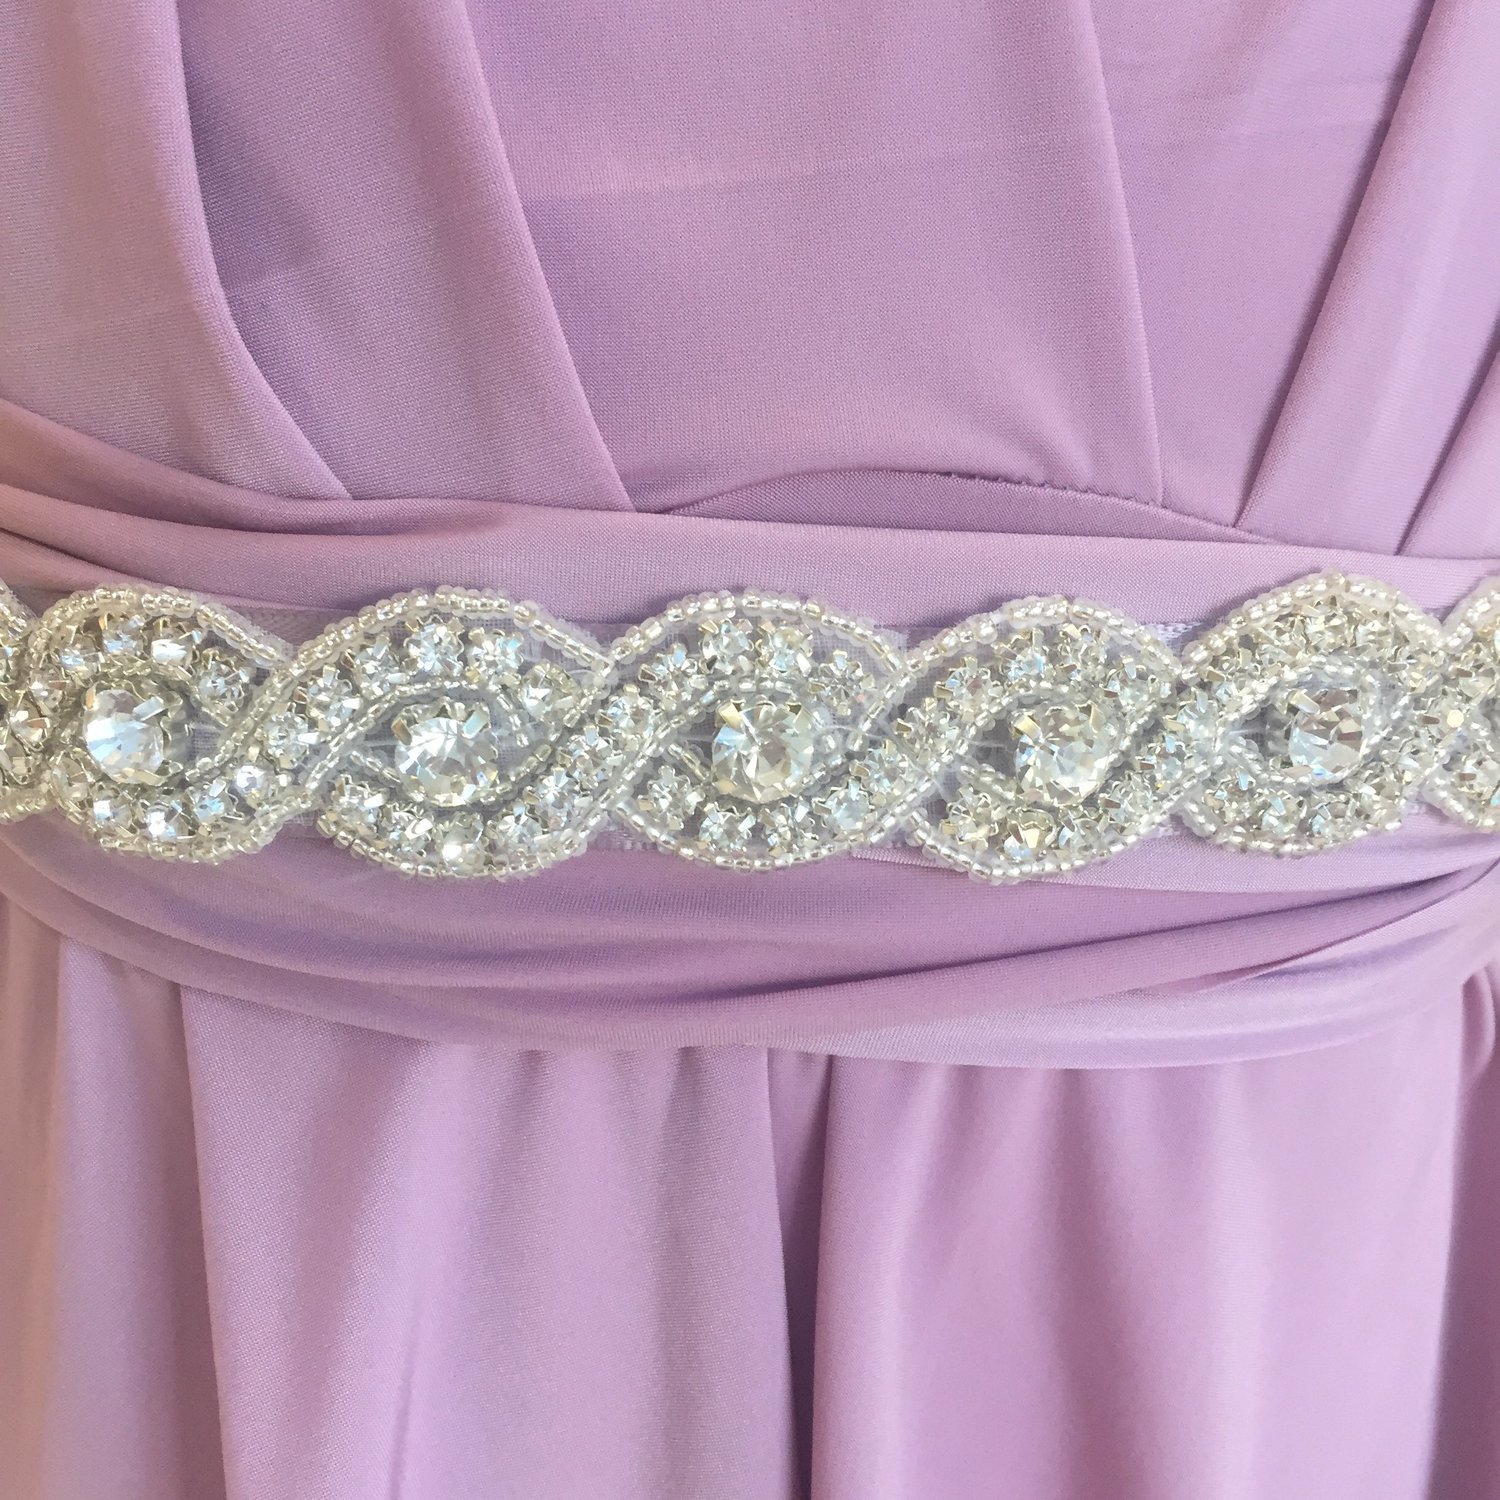 YVONNE - Bling Ribbon Bridal Wedding Sash Belt